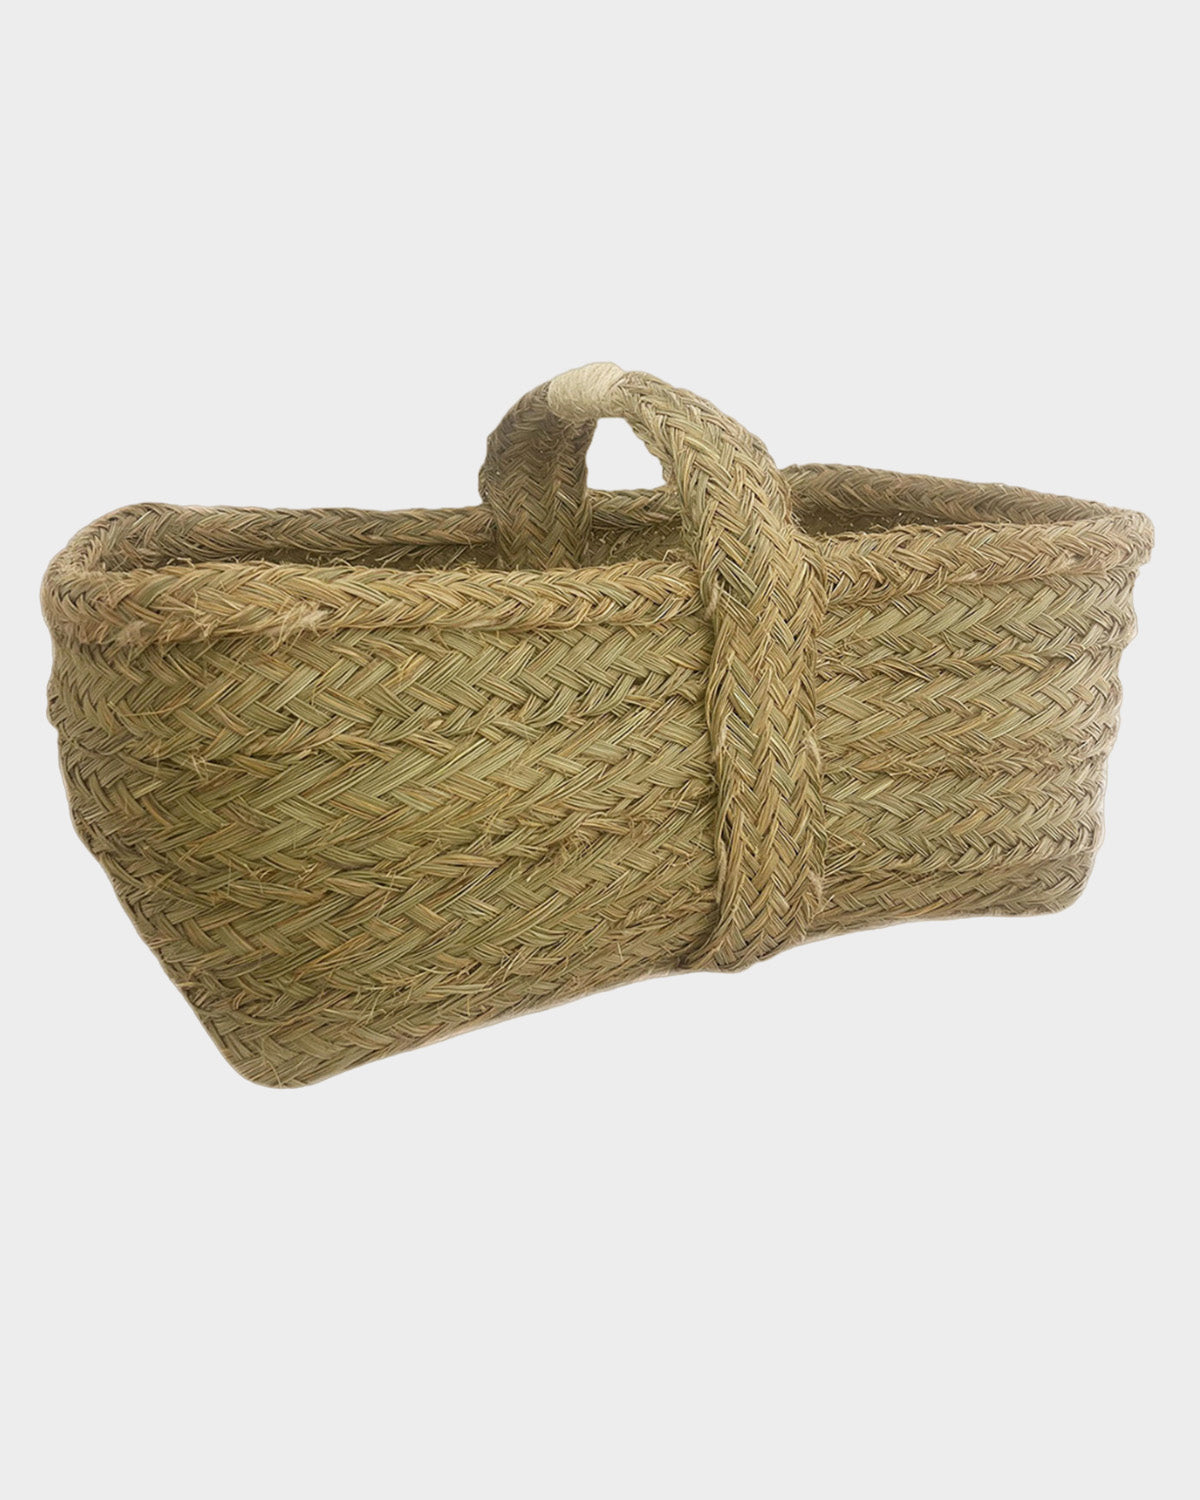 Canals firewood basket